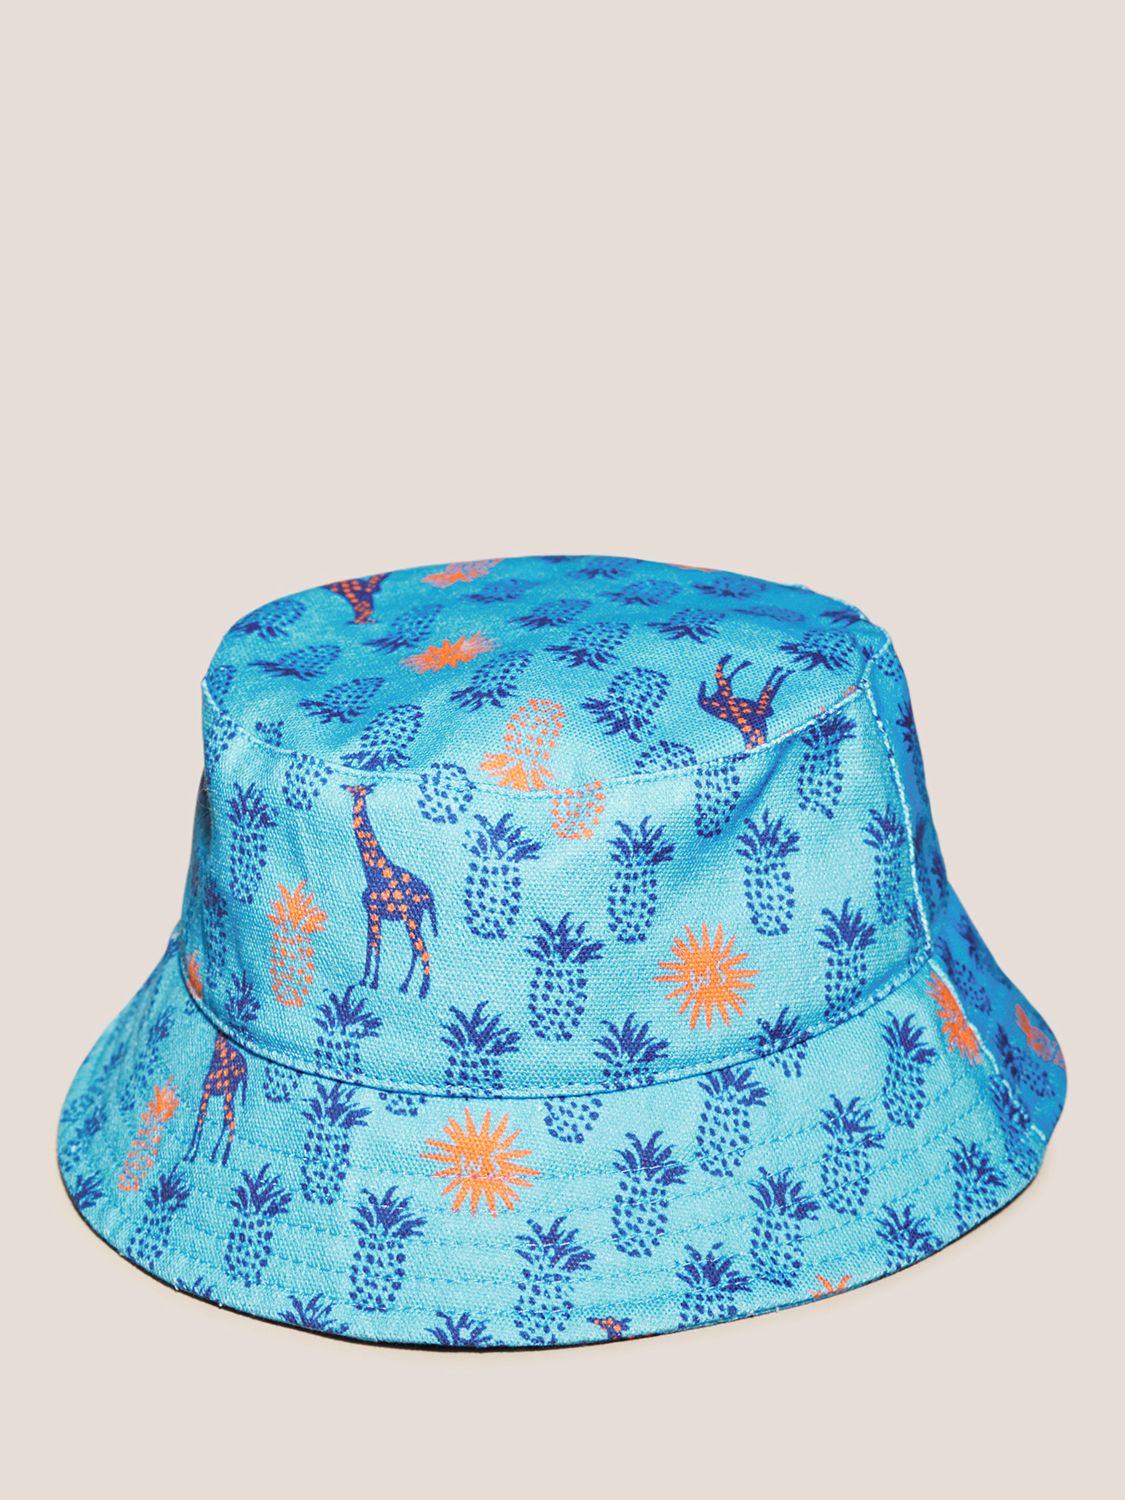 White Stuff Kid's Pineapple Print Bucket Hat, Blue/Multi, S-M